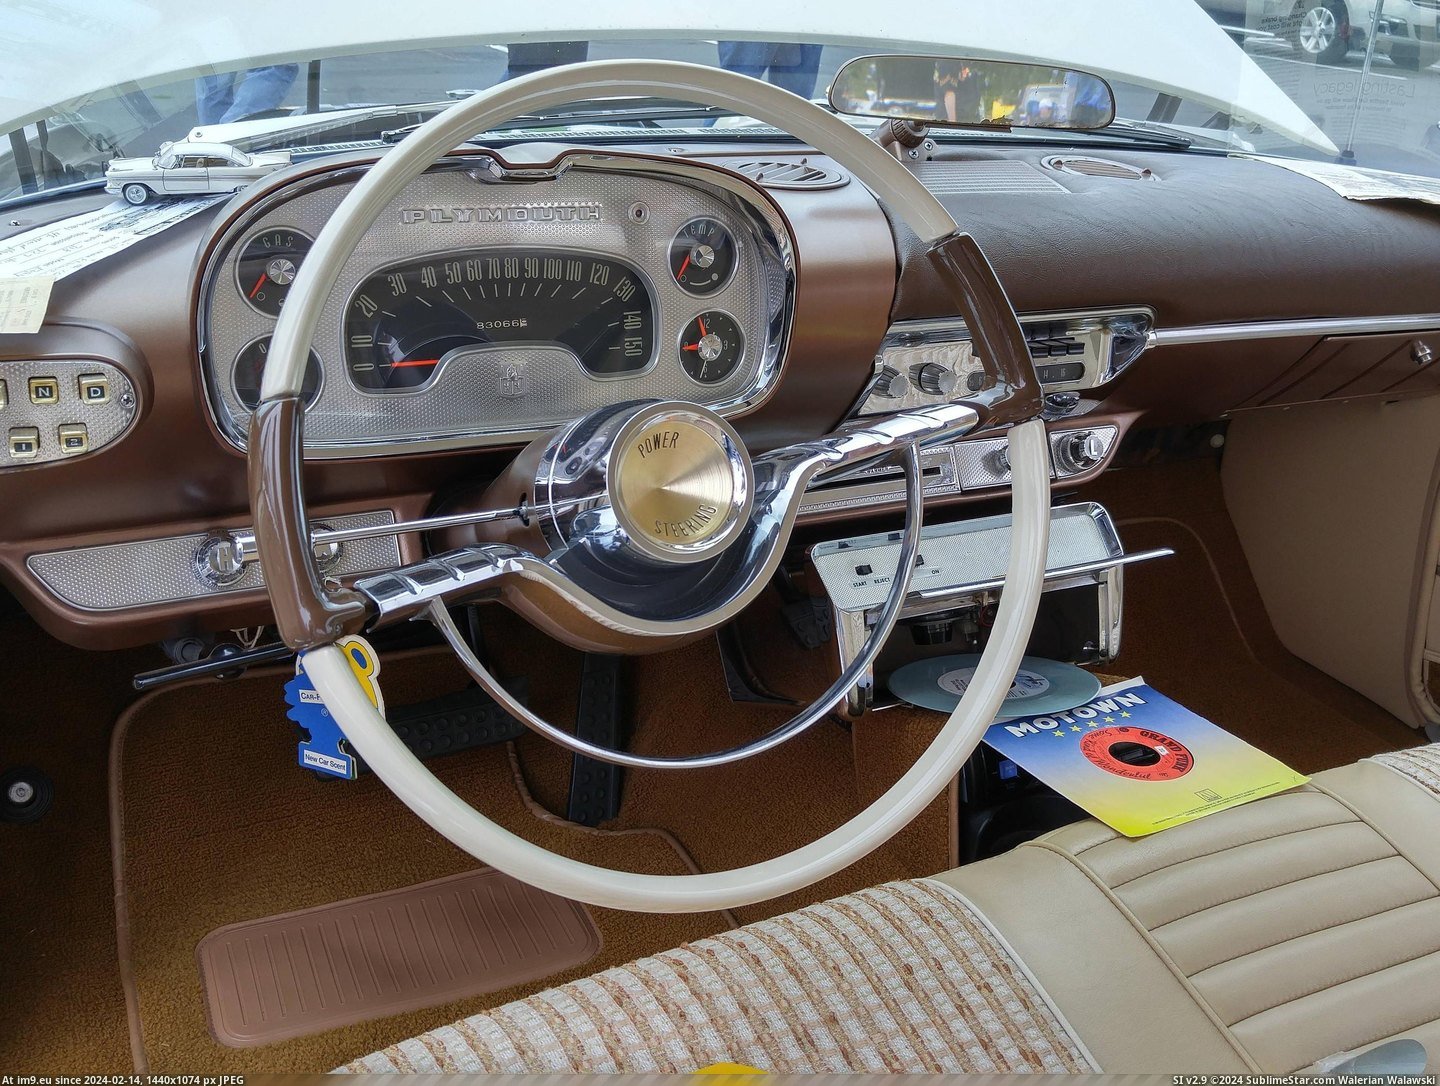 #Car #Player #Stereo #Record [Mildlyinteresting] This car stereo has a record player Pic. (Obraz z album My r/MILDLYINTERESTING favs))